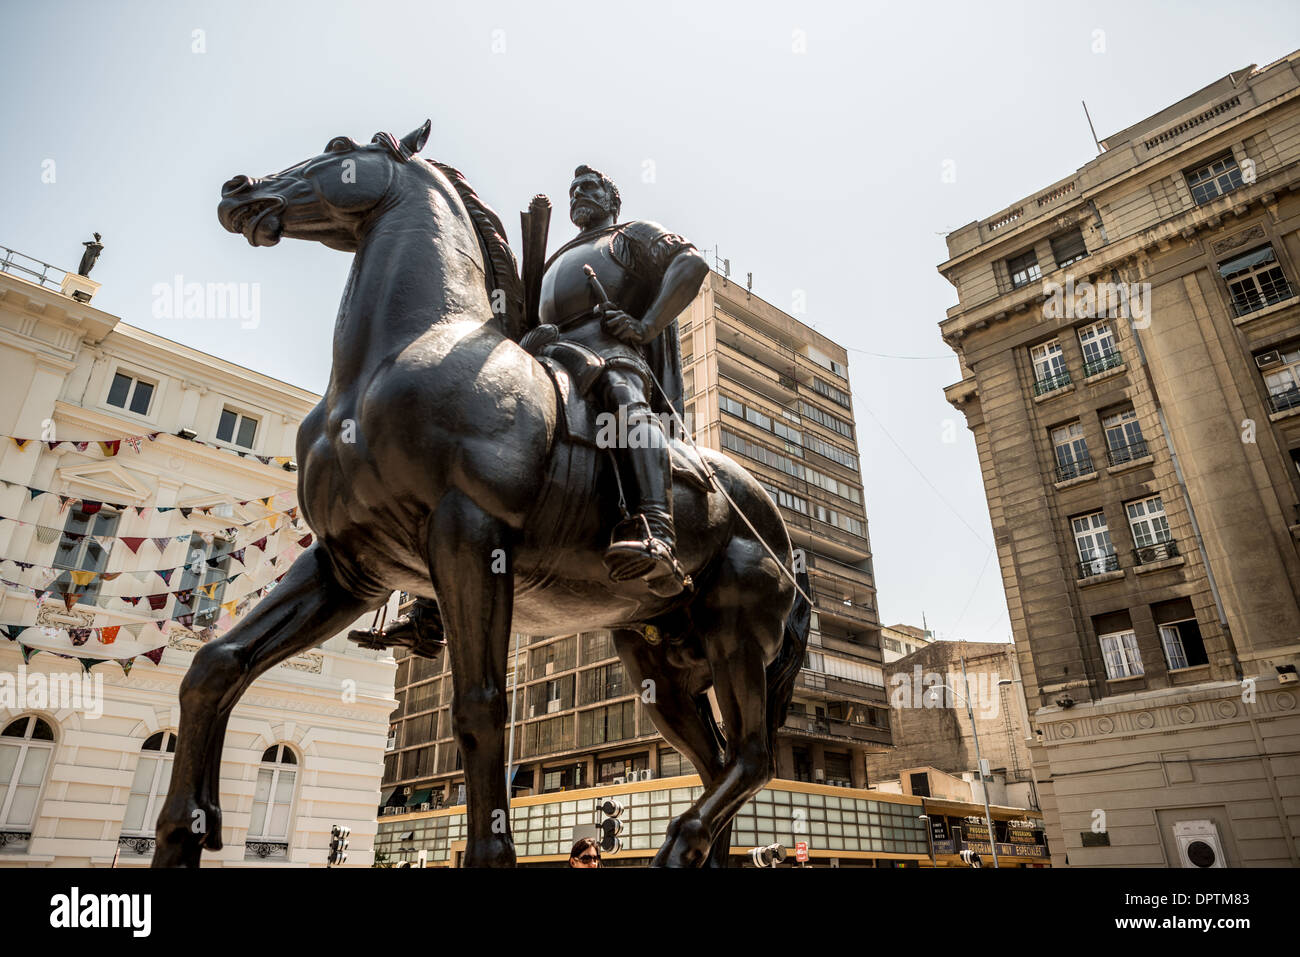 SANTIAGO, Chile - An equestrian statue of Don Pedro de Valdivia, the Spanish conquistador who founded Santiago in 1541, in Plaza de Armas in the center of Santiago de Chile. Stock Photo